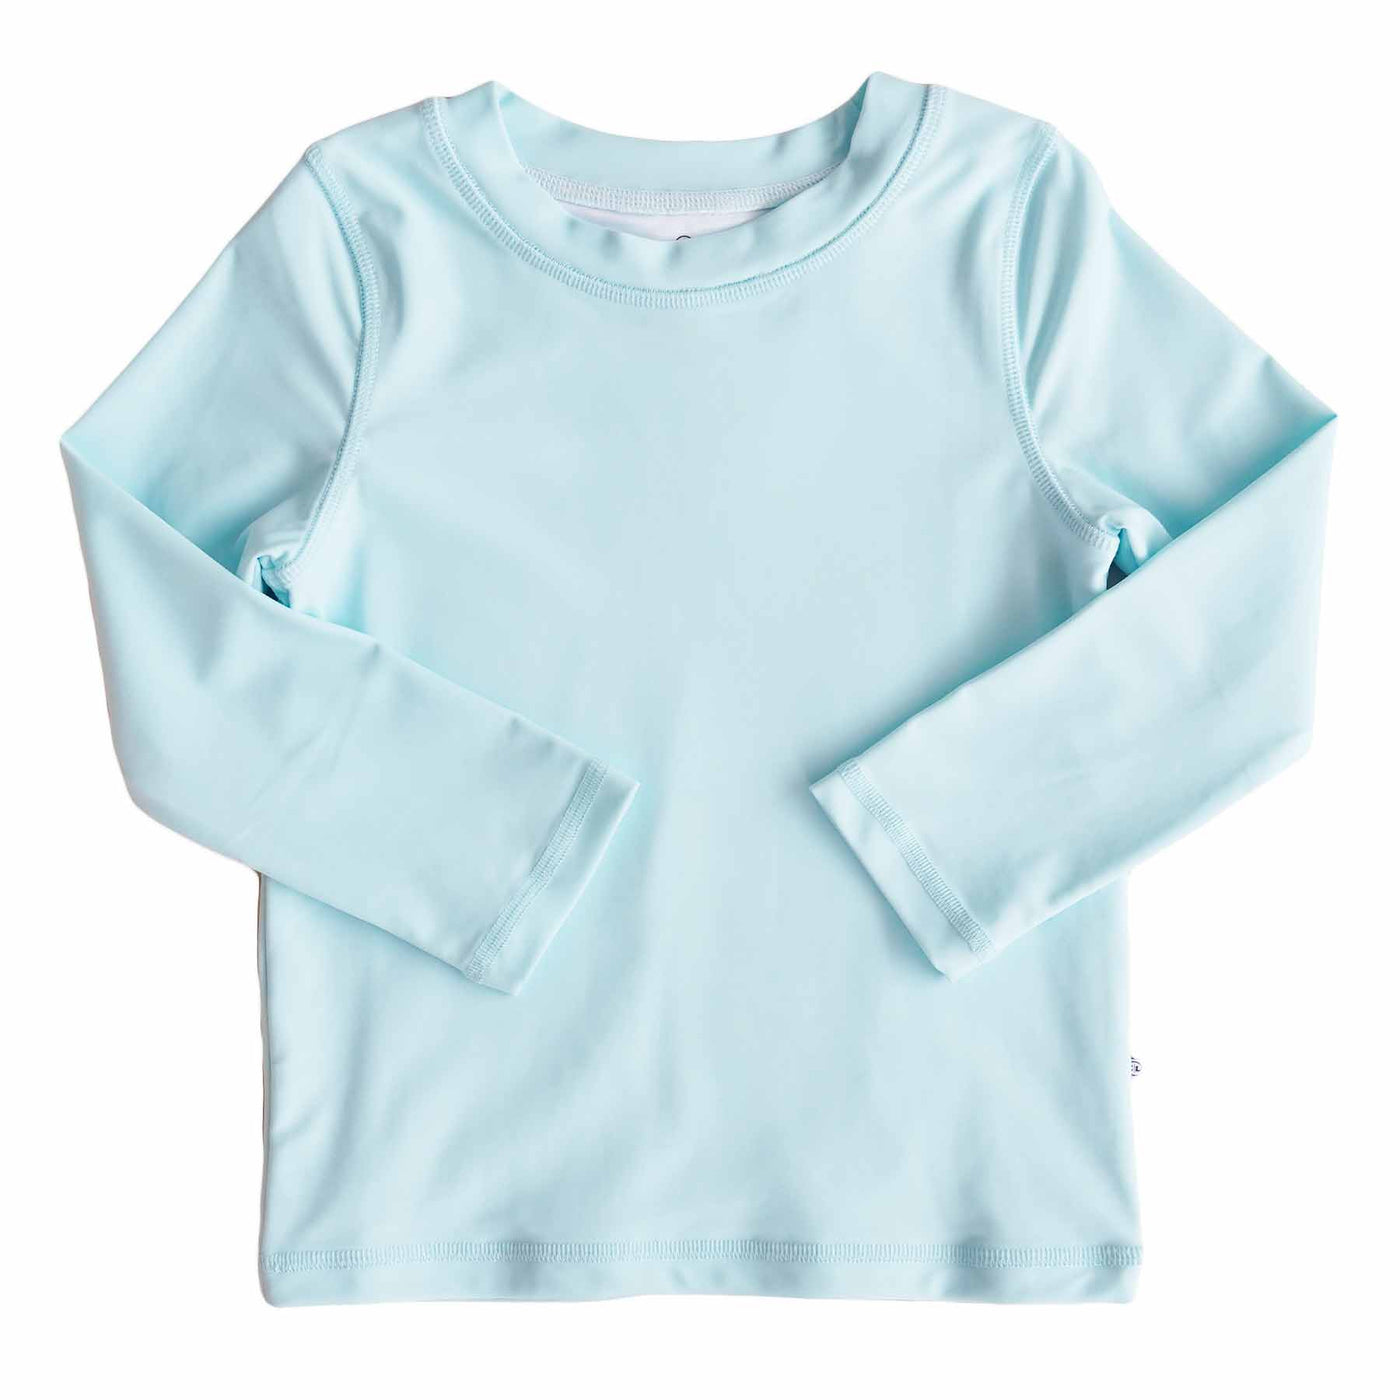 light blue long sleeve rash guard shirt for boys 